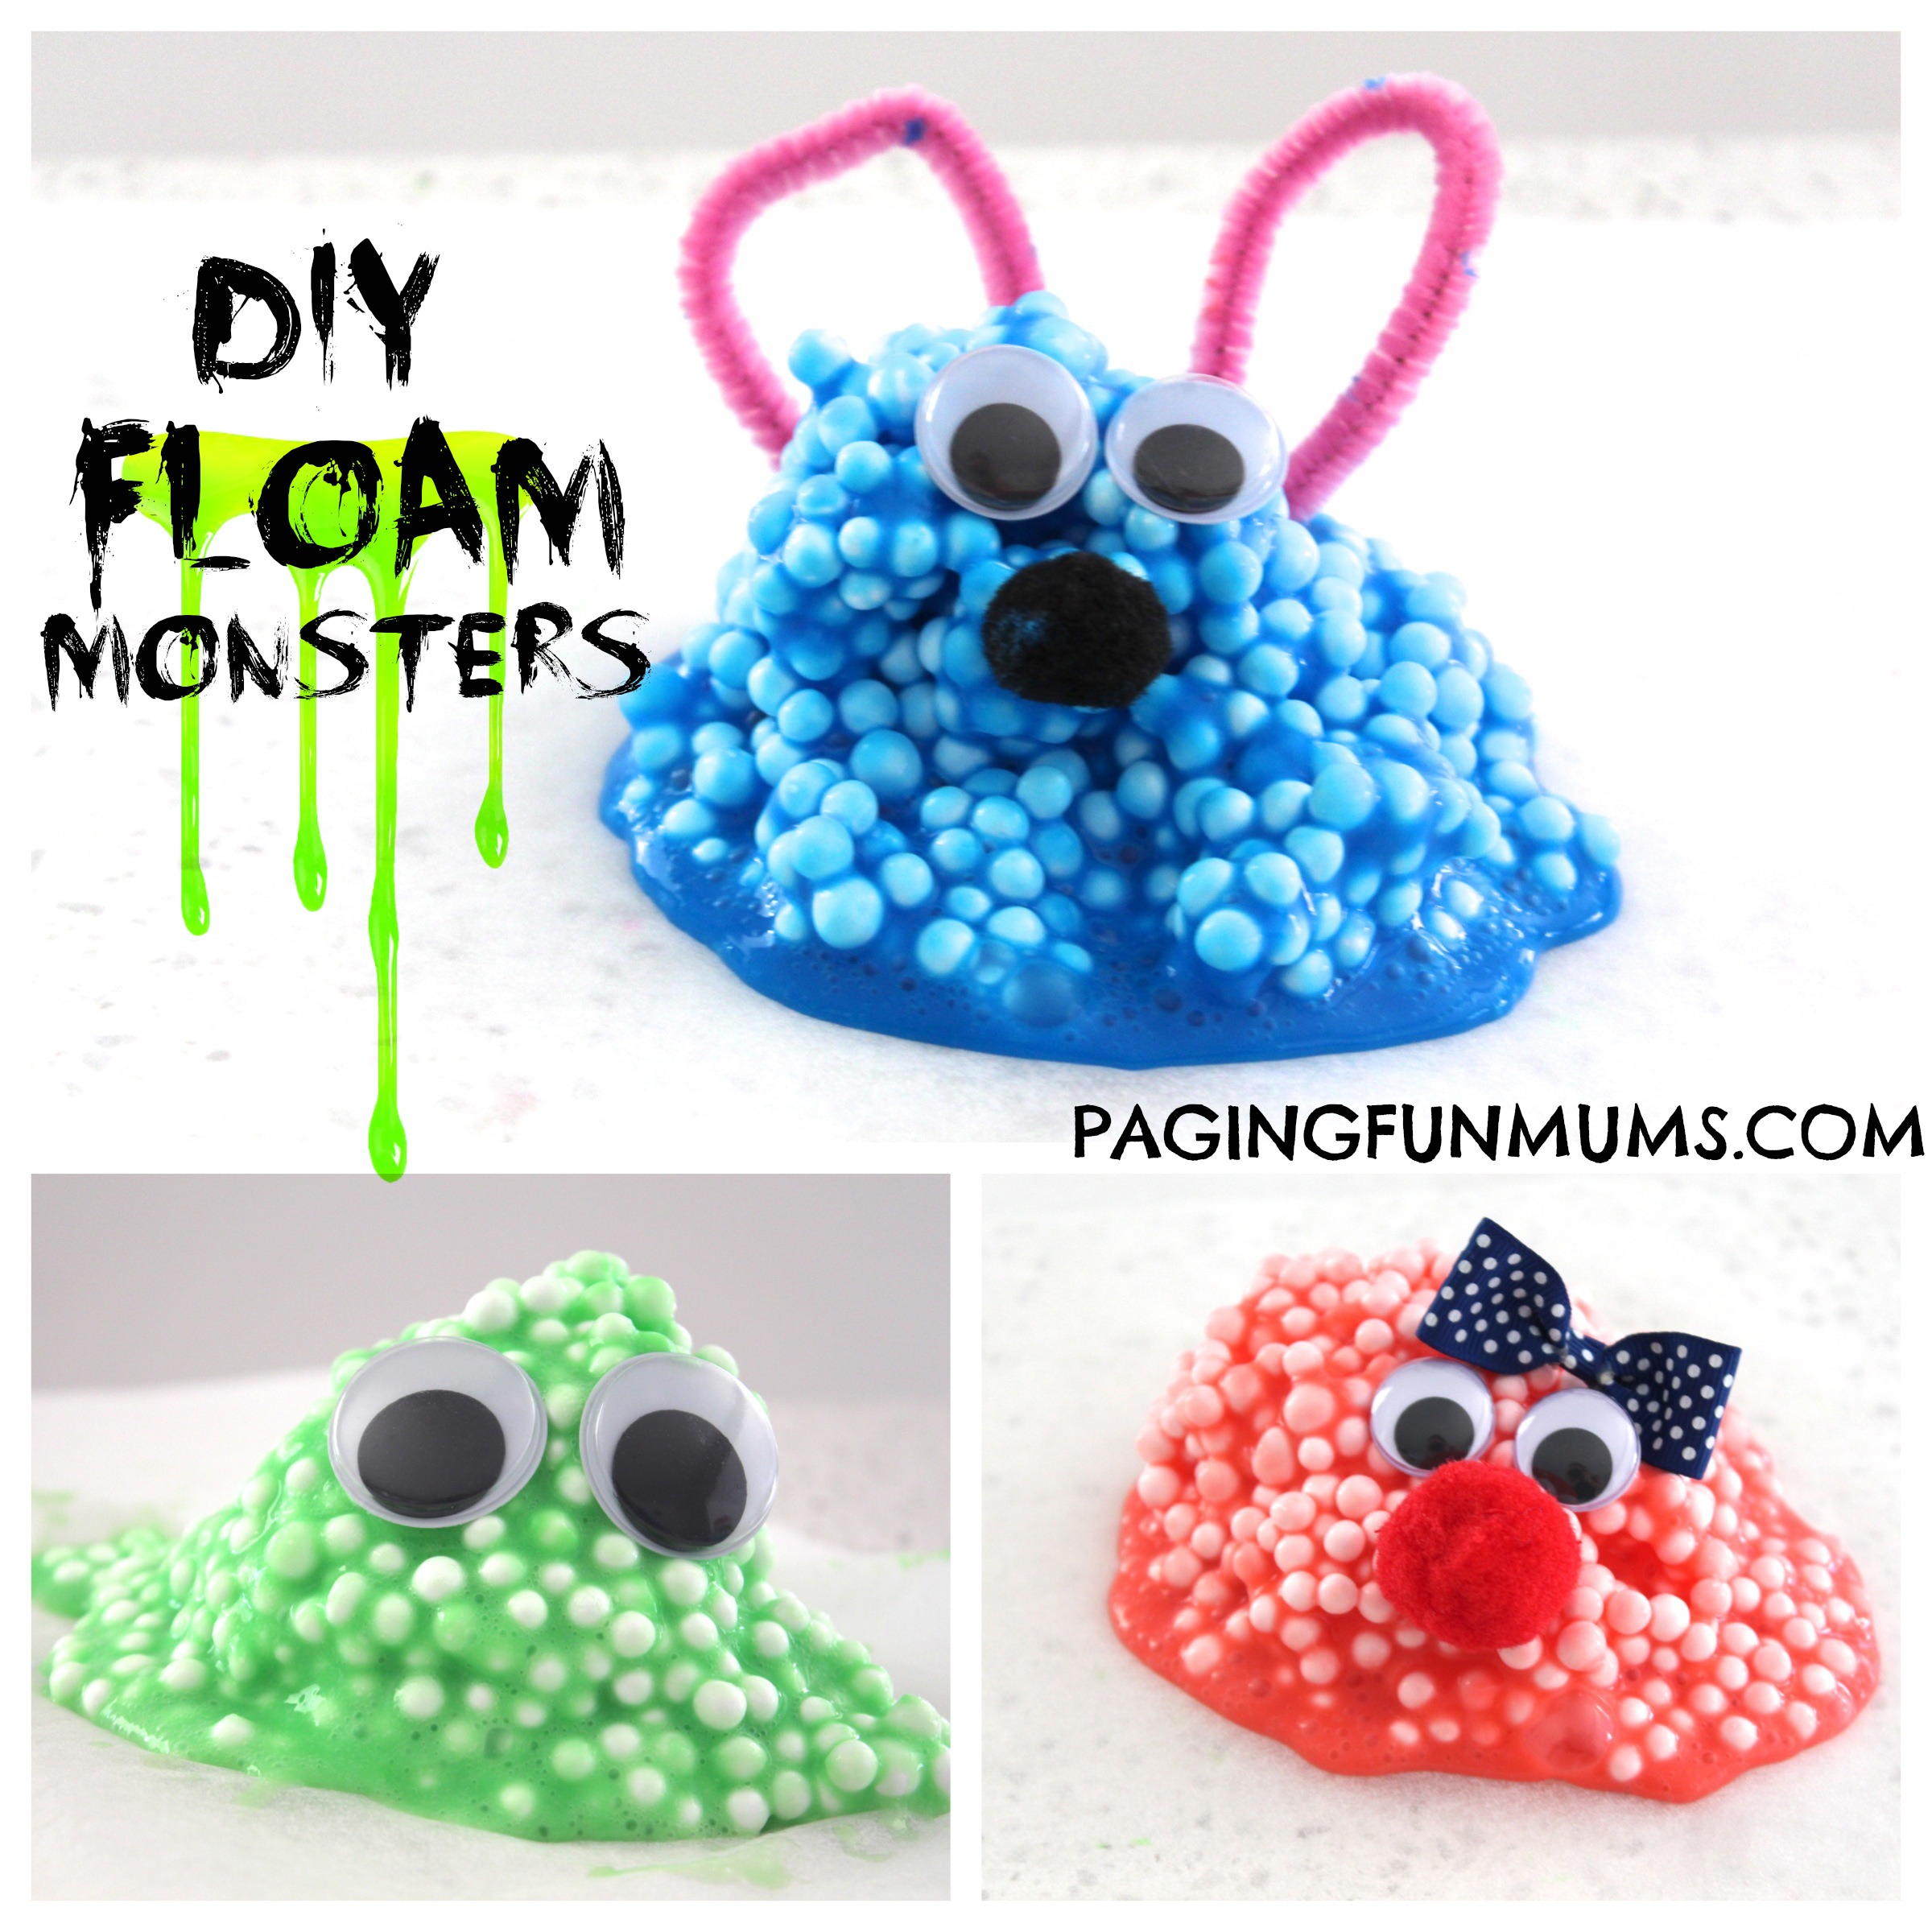 Floam' Monsters! Gooey, sensory FUN! - Paging Fun Mums